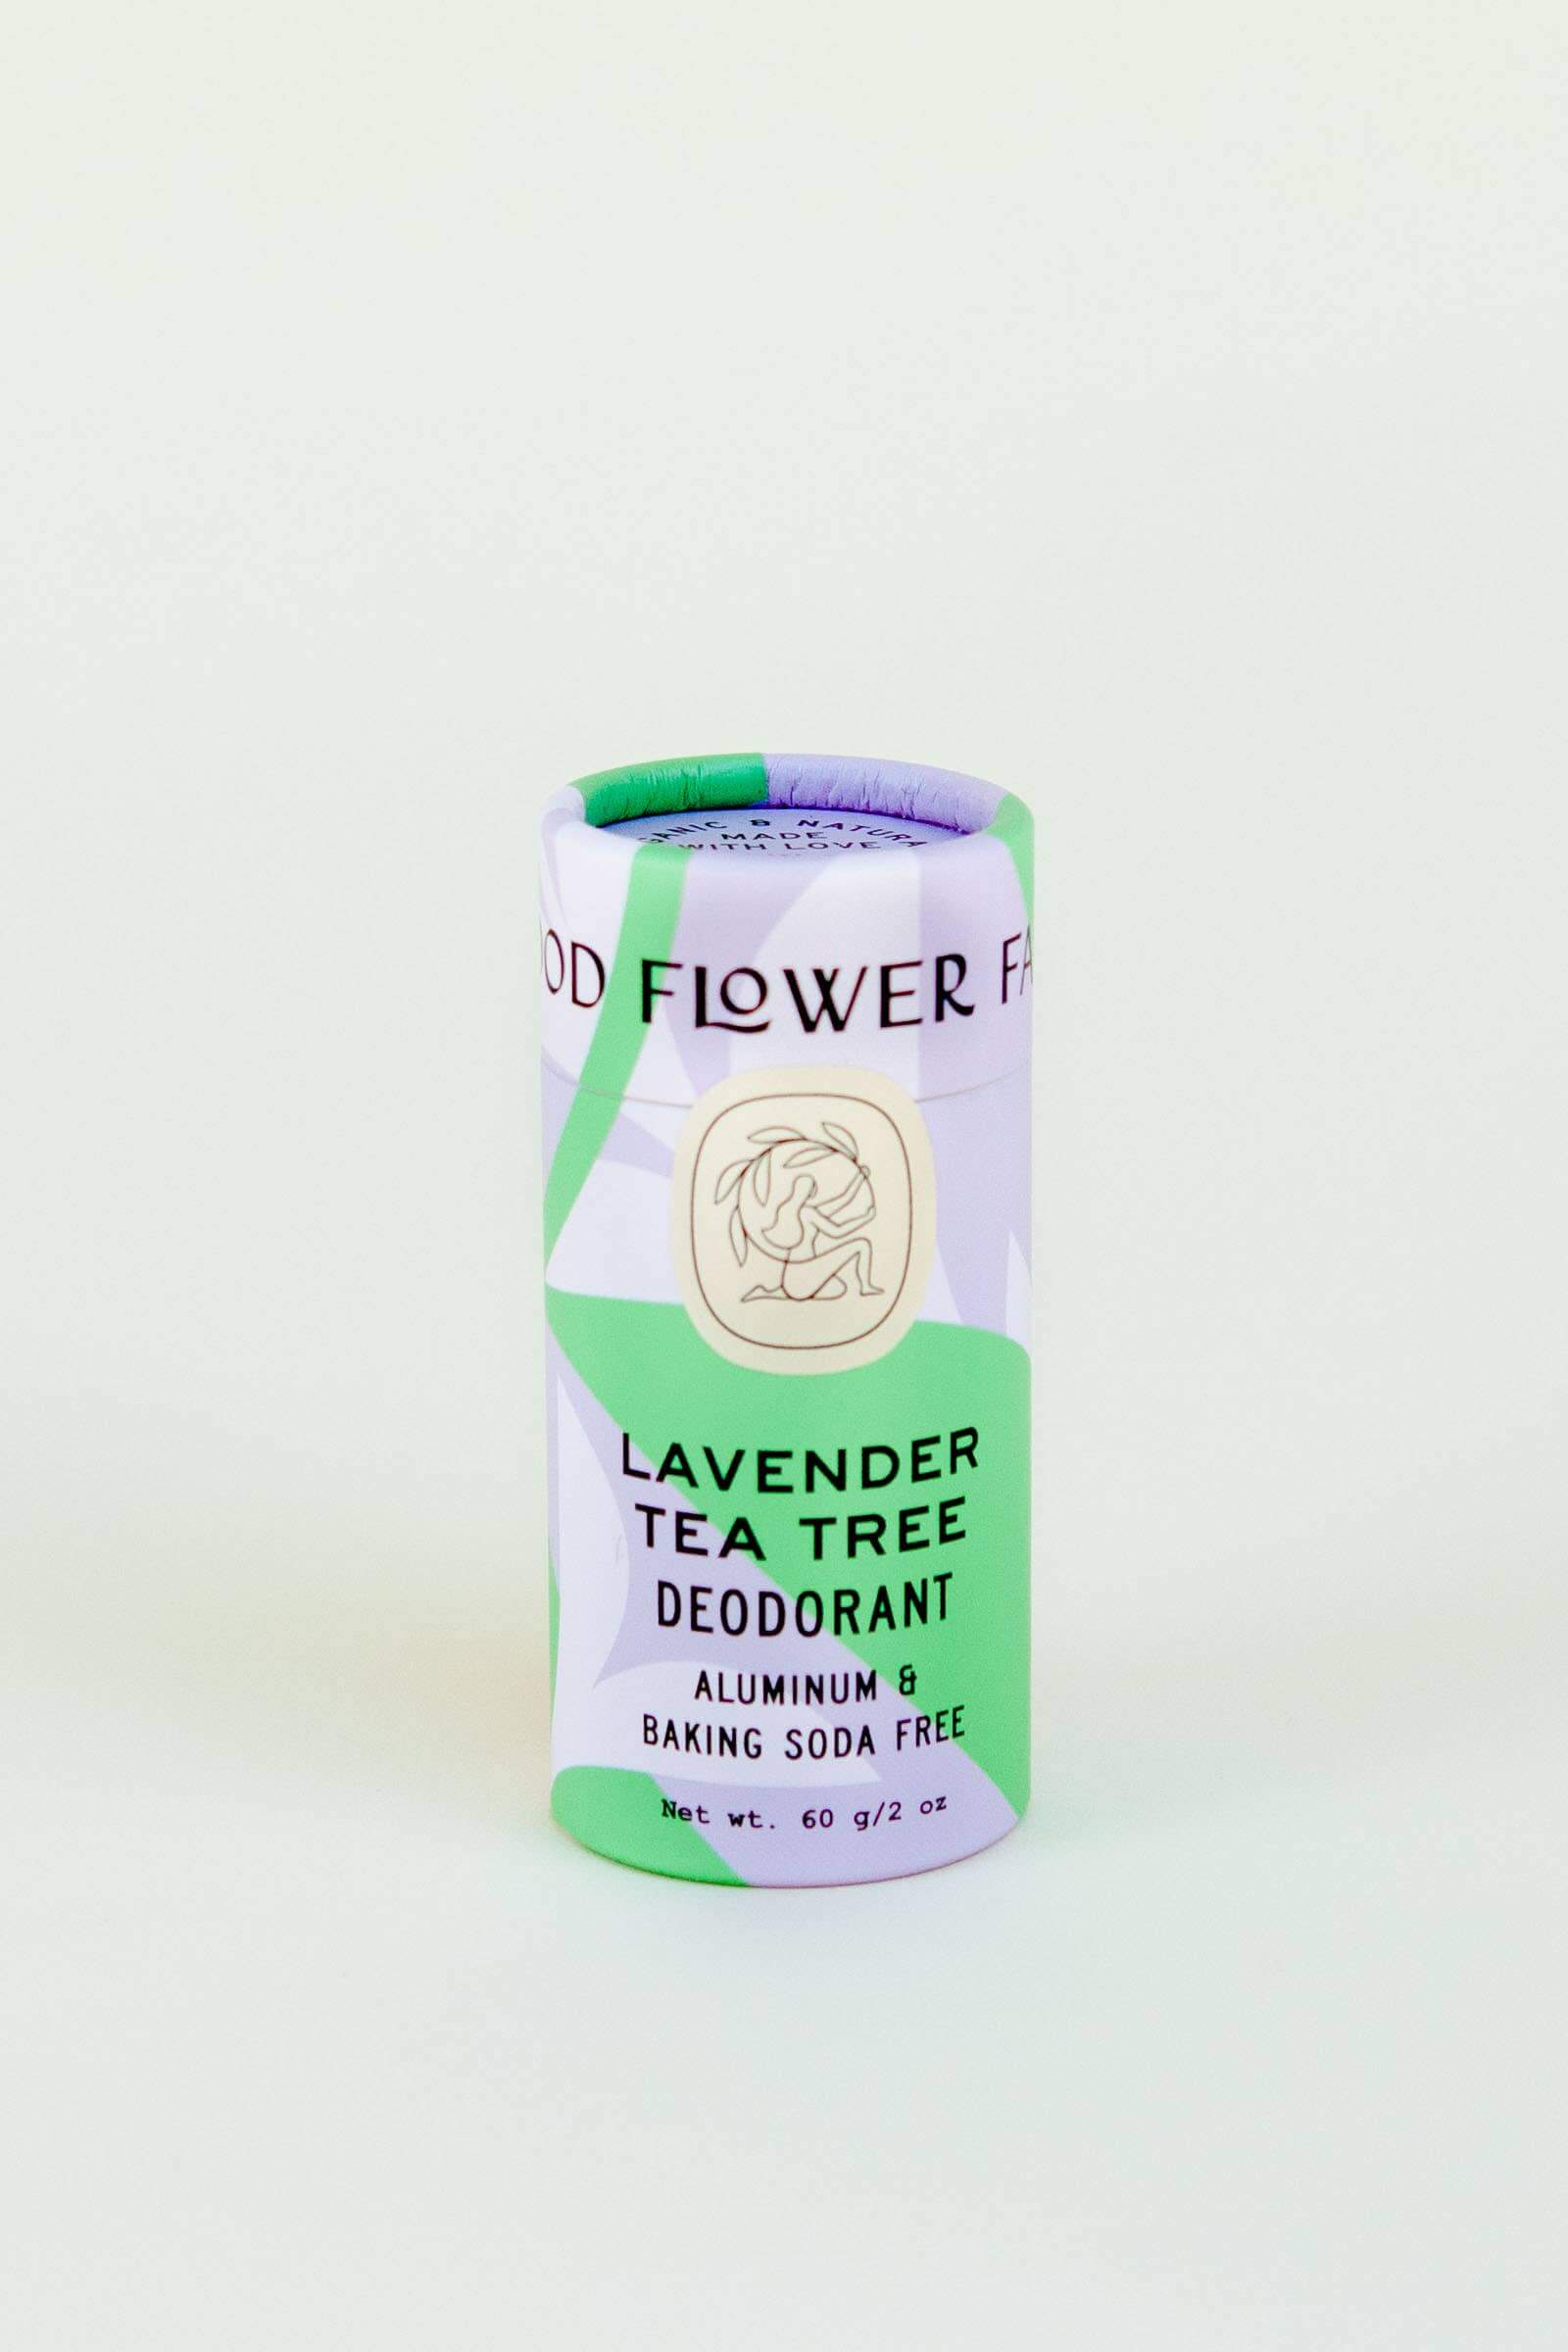 Lavender tea tree deodorant in a purple, green and white biodegradable tube.